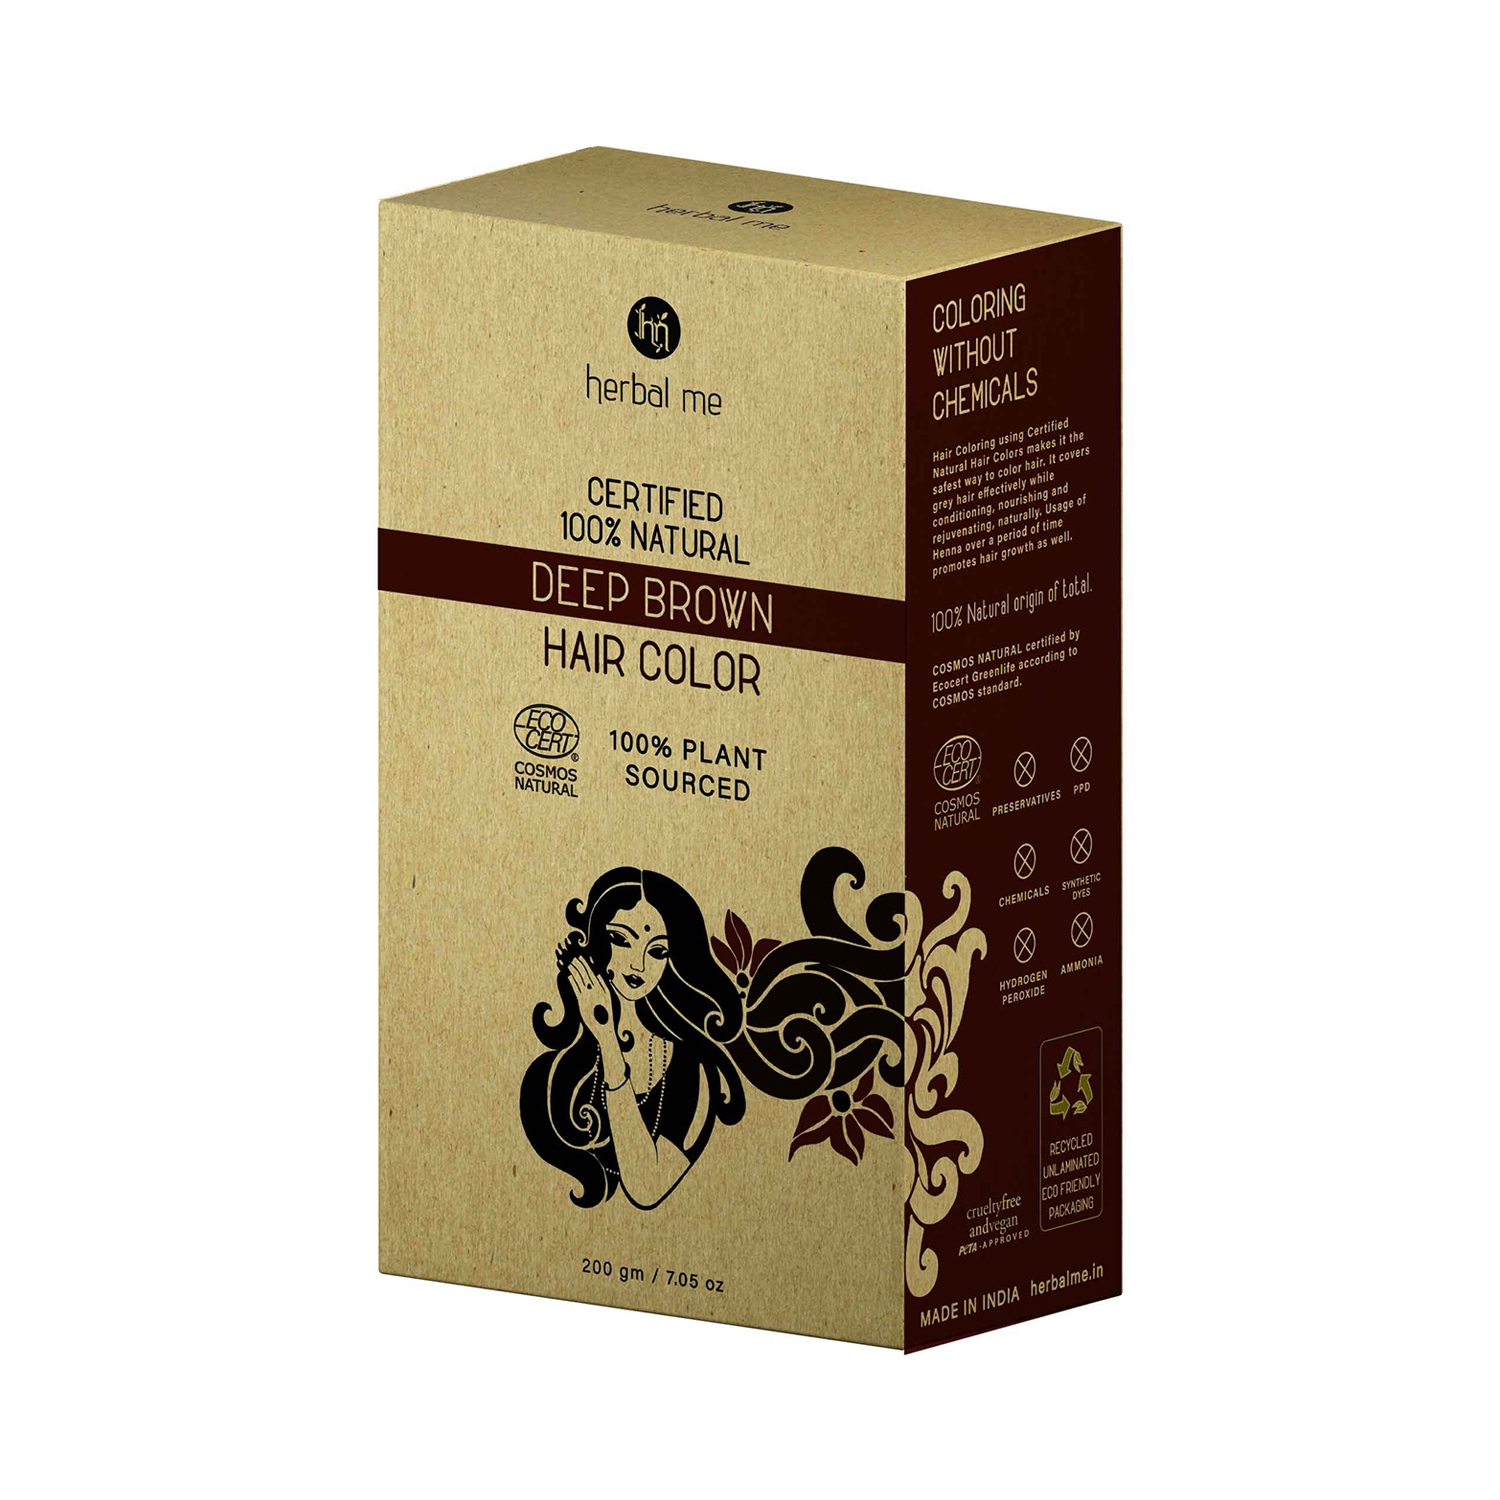 Herbal Me Certified 100% Natural Henna Hair Color - Deep Brown (200g)